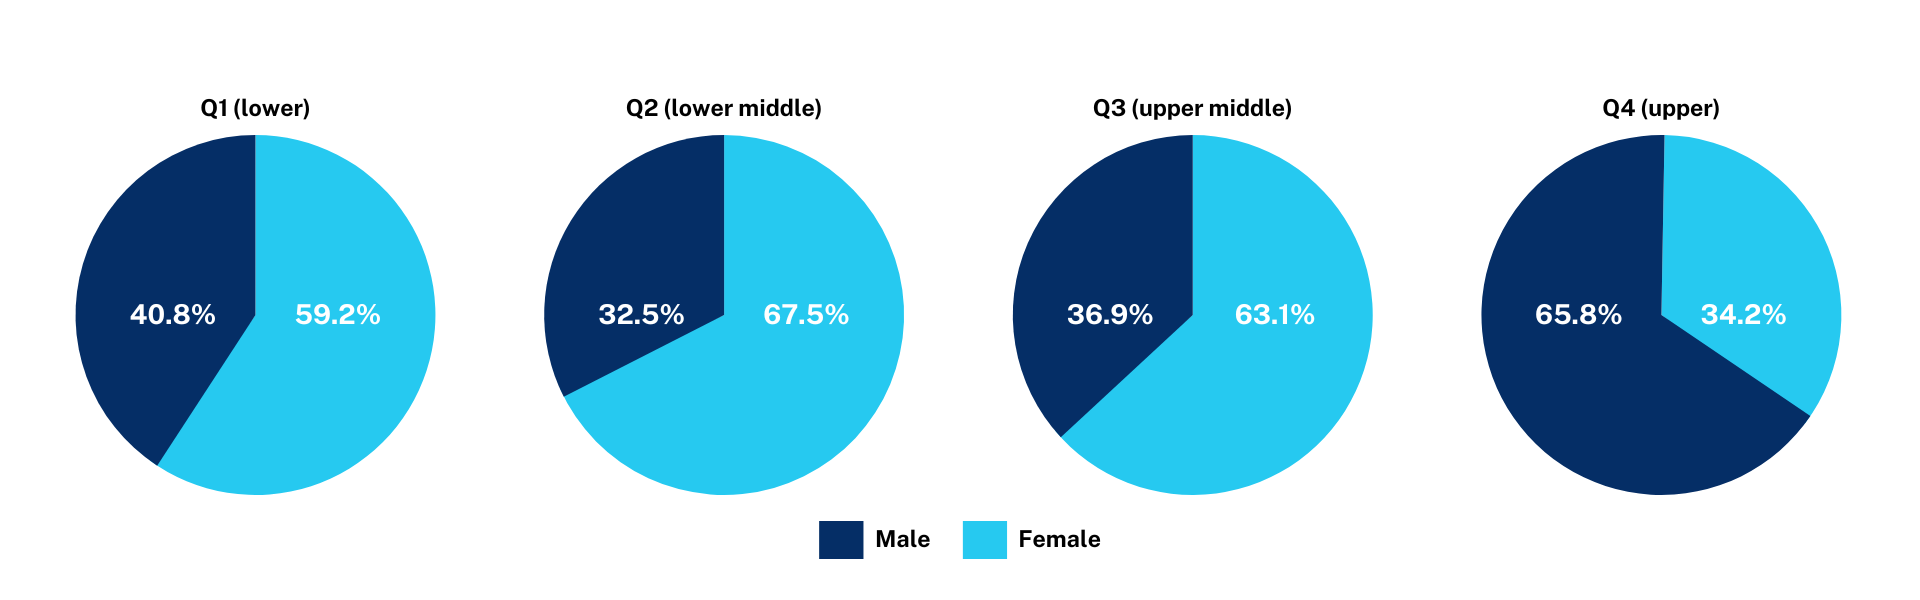 Pay Quartile Male % Female % Q1 (lower) 40.8 59.2 Q2 (lower middle) 32.5 67.5 Q3 (upper middle) 36.9 63.1 Q4 (upper) 65.8 34.2 